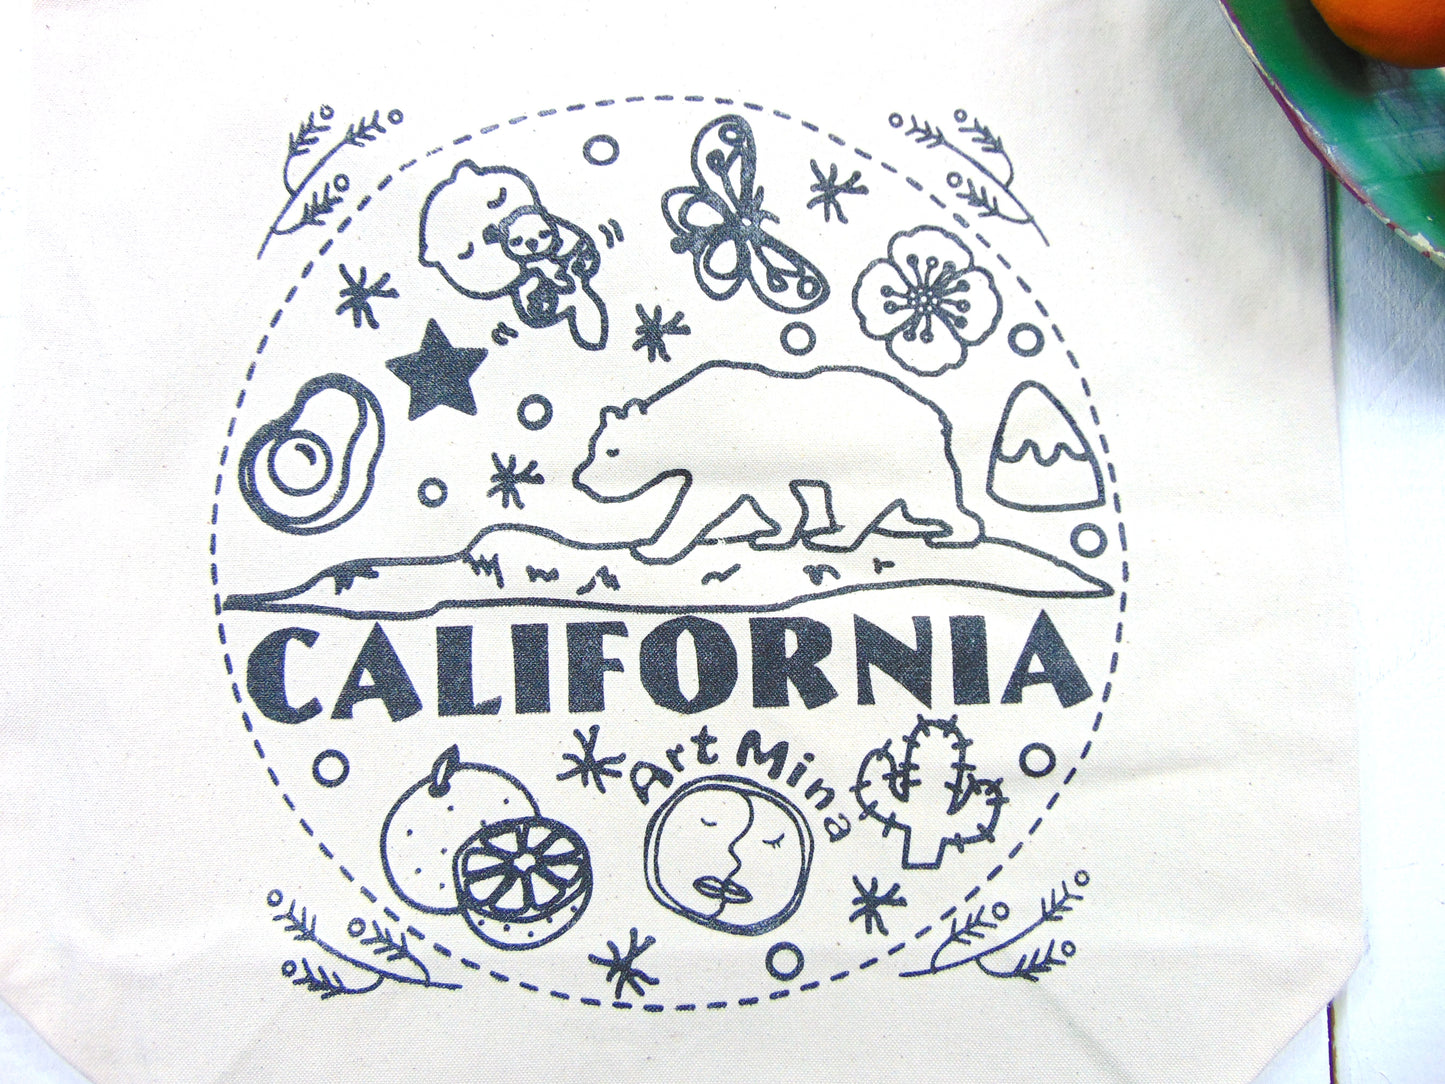 Canvas Tote Bag "California Bear!" [FREE SHIPPING]